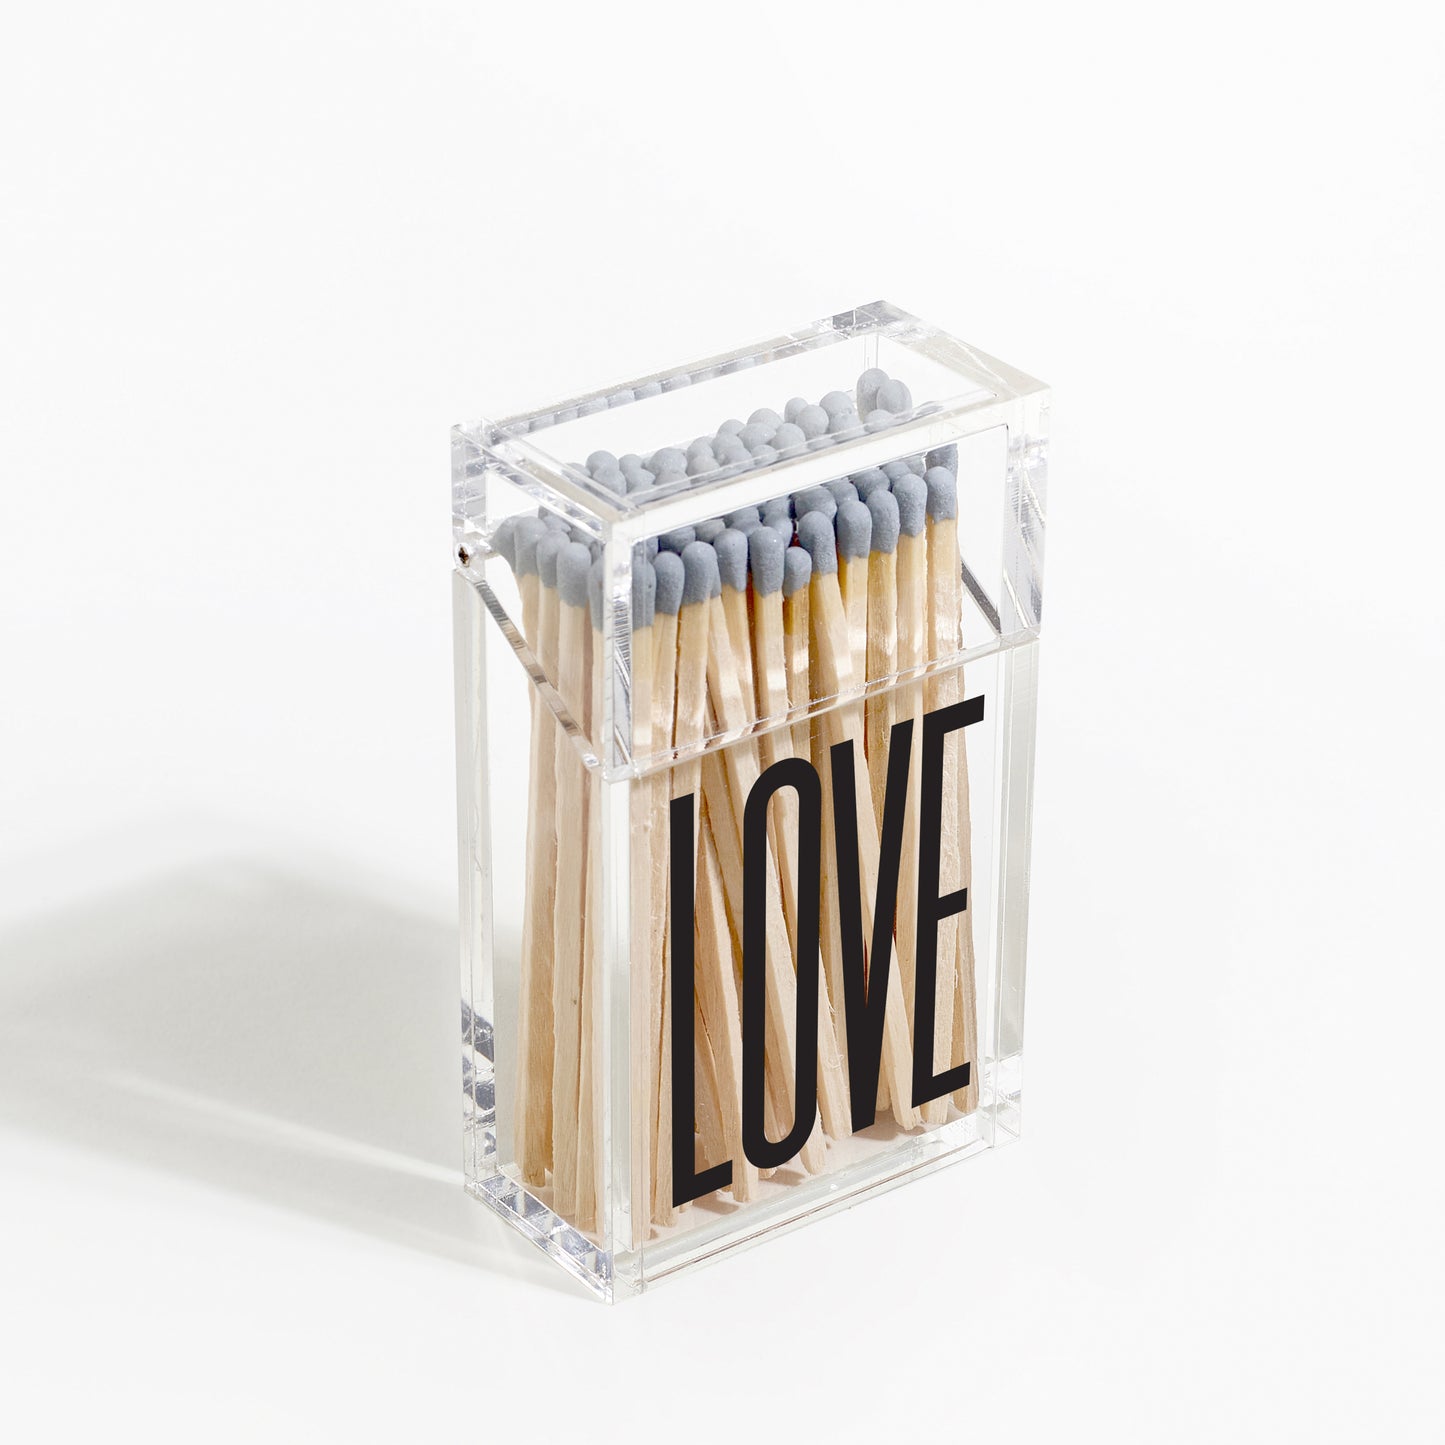 LOVE Acrylic Match Case